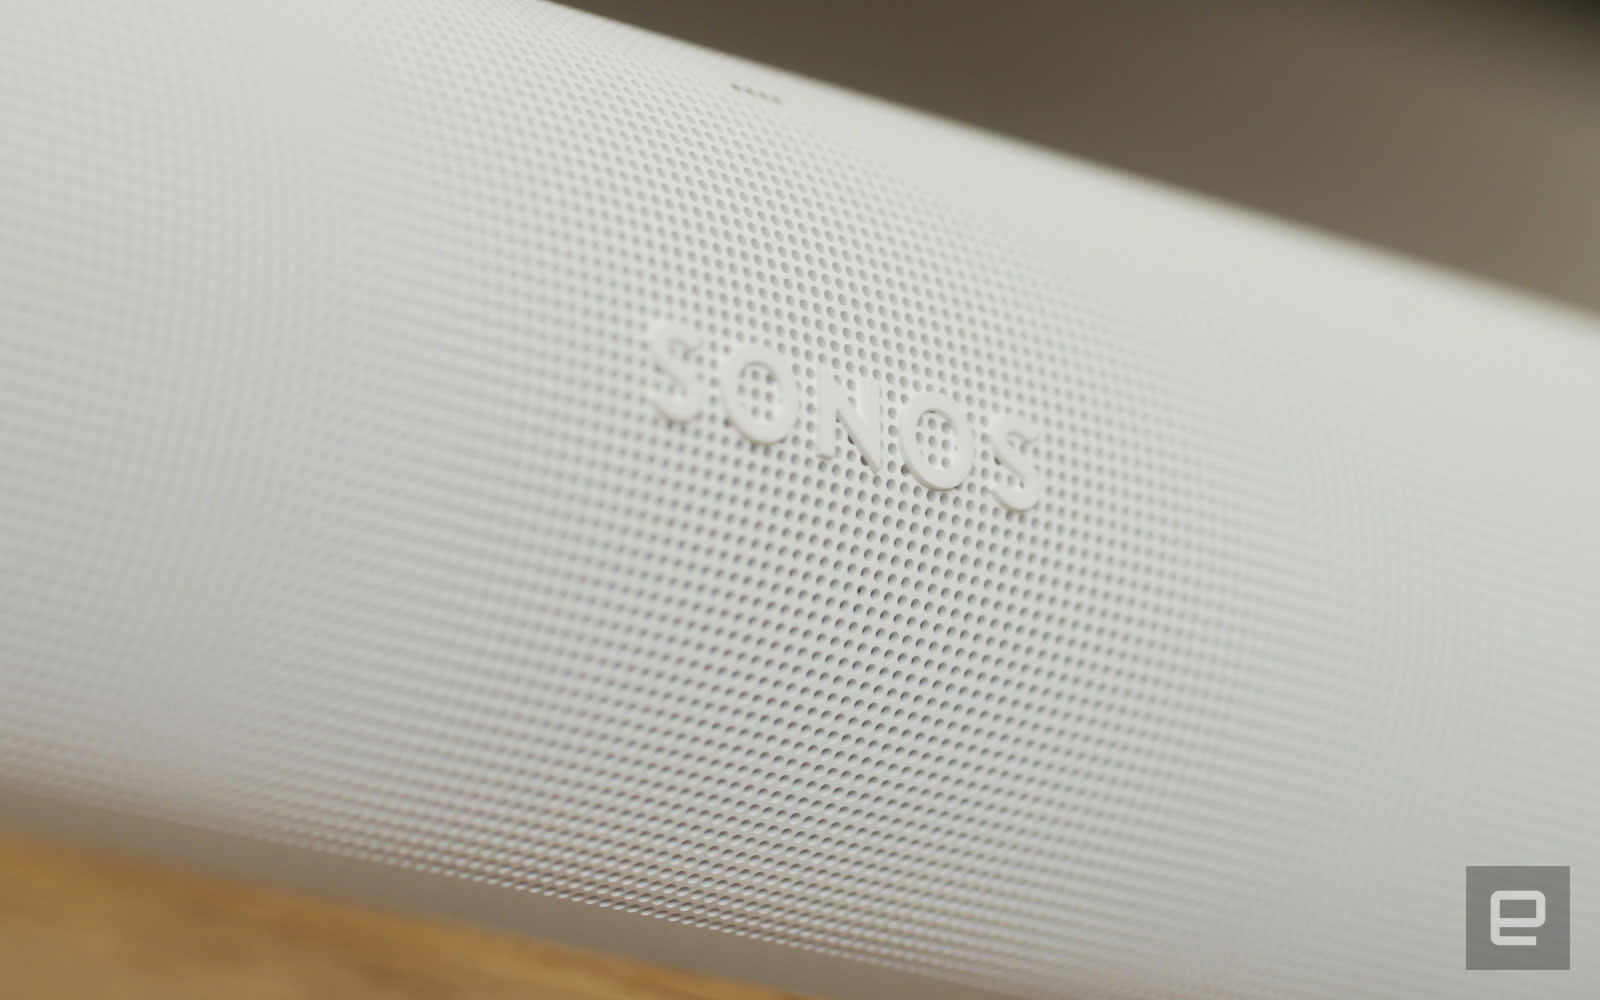 Sonos’ next portable speaker will cost $ 169